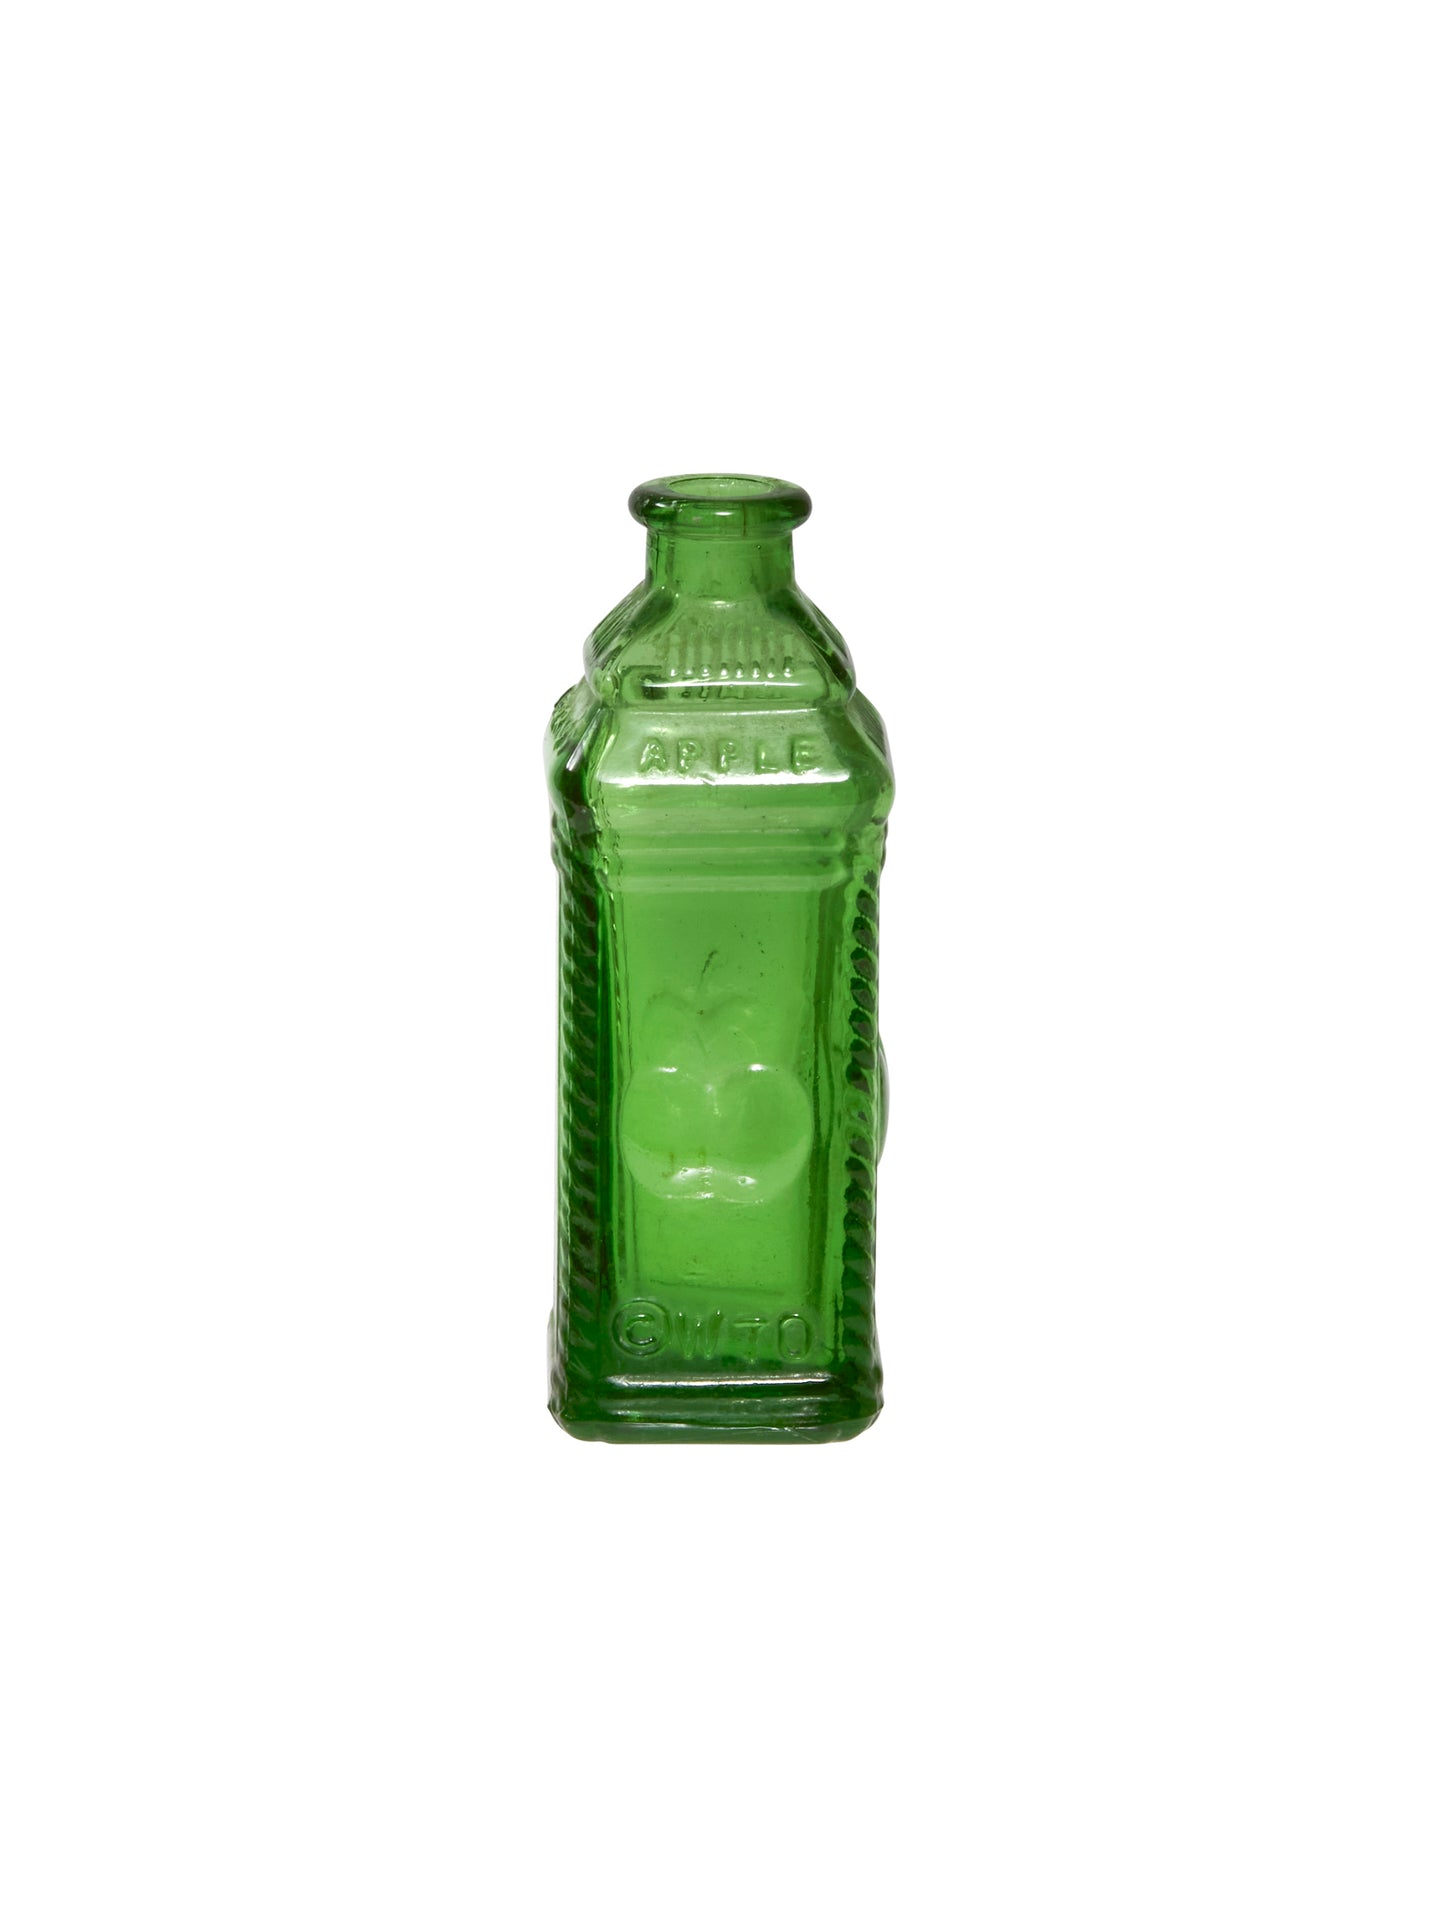 Vintage Retro Berring's Apple Bitters Bottle Miniature Green Bottle Weston Table